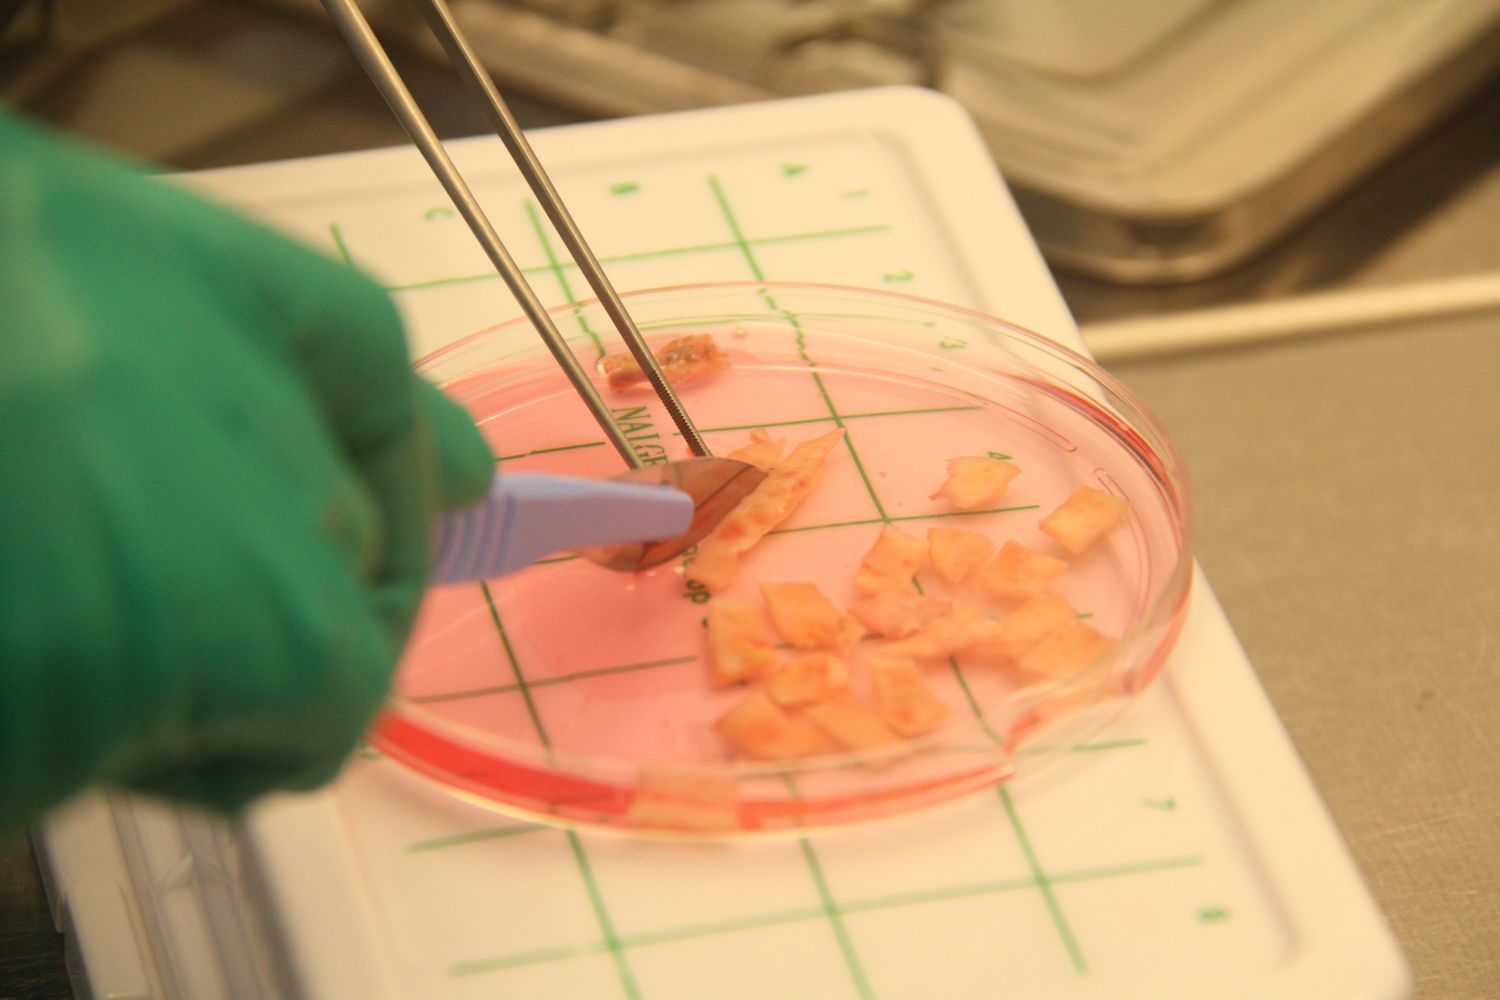 Verwerking eierstokweefsel in het labo van het CRG